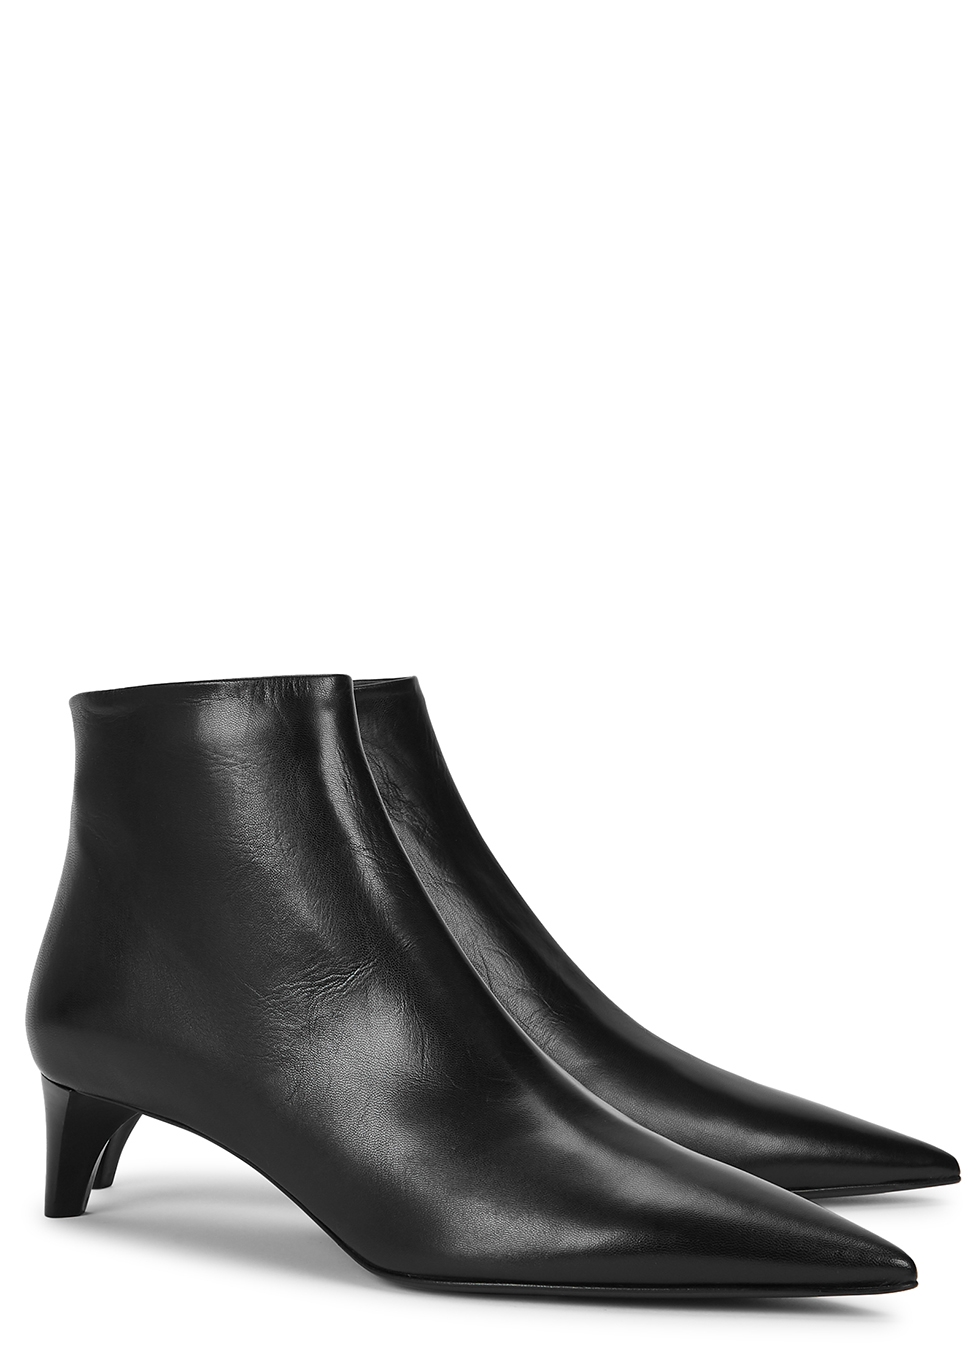 jil sander leather ankle boots